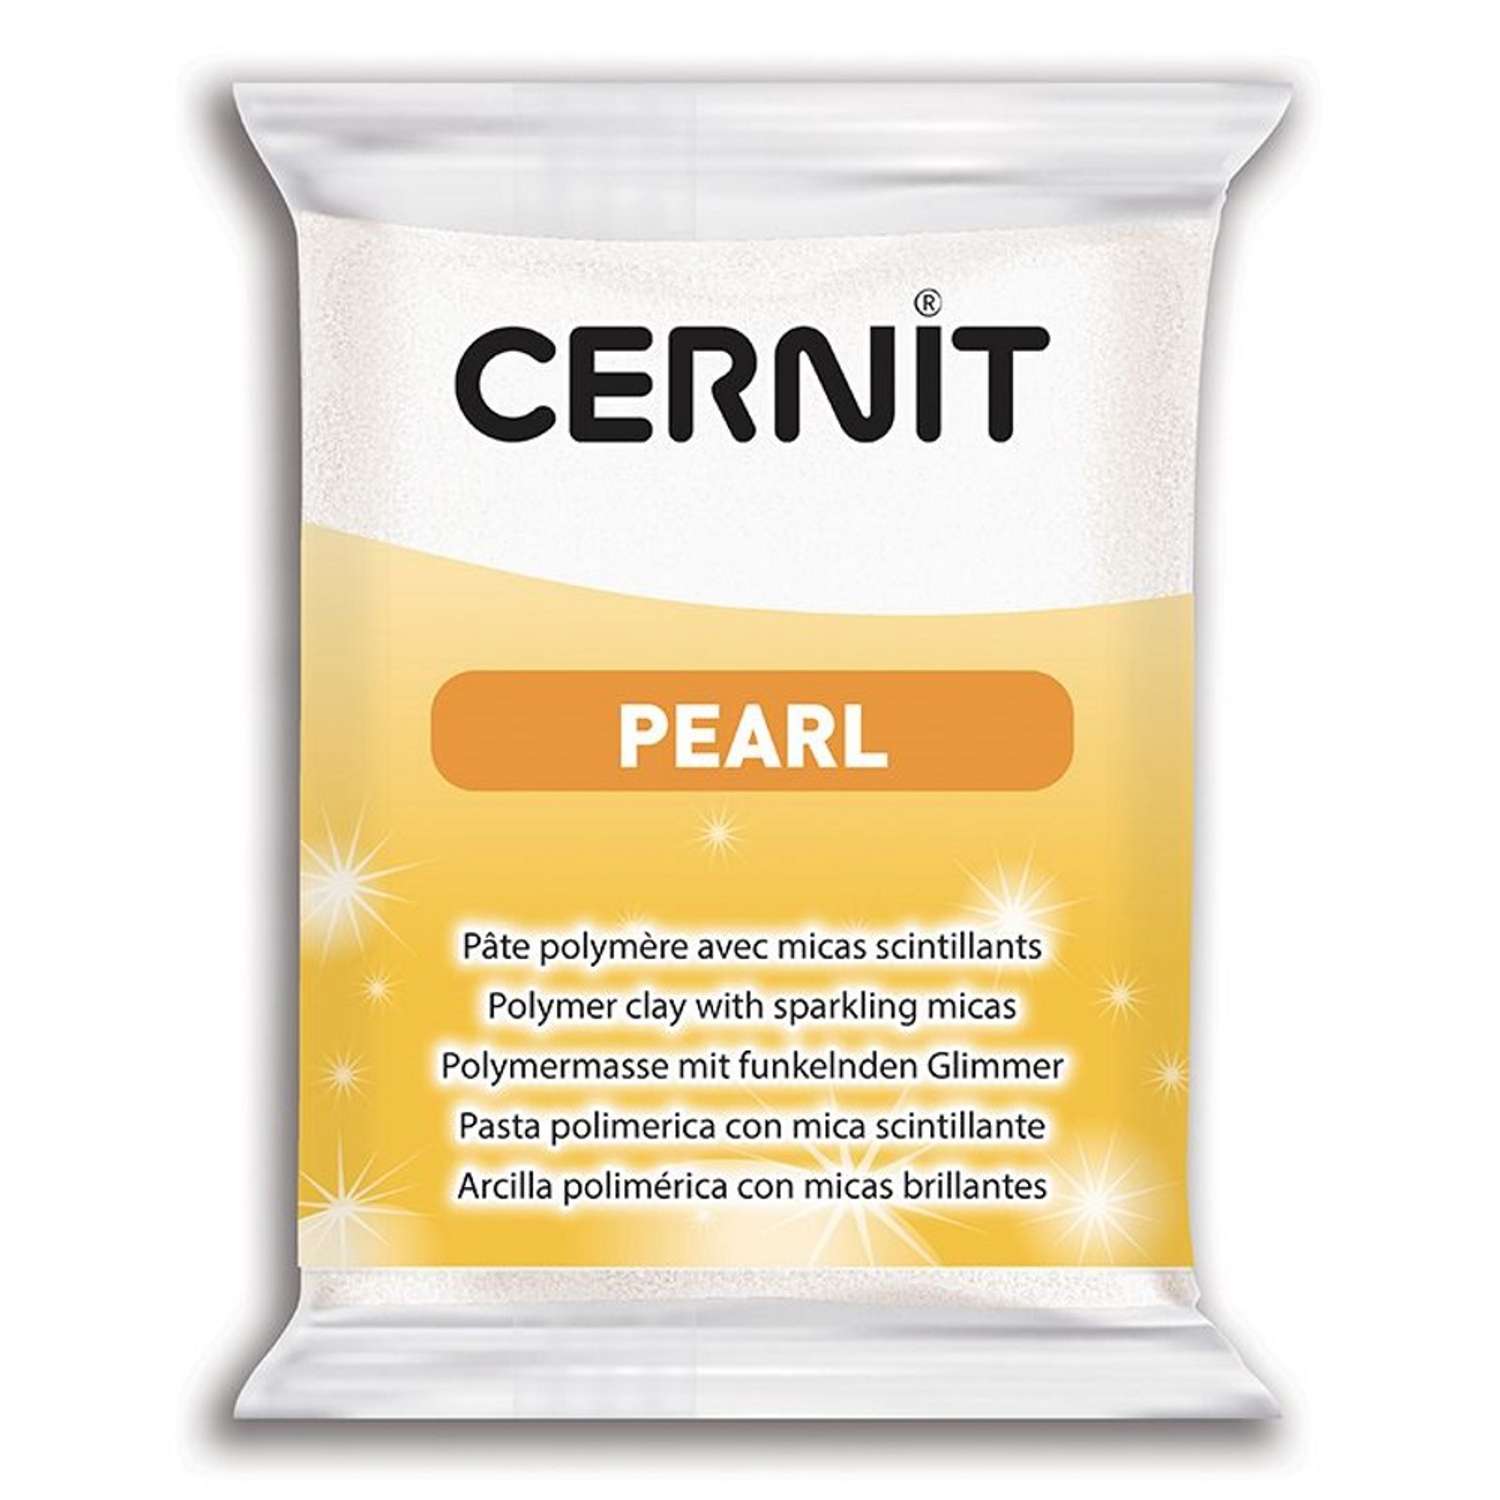 Полимерная глина Cernit пластика запекаемая Цернит pearl 56 гр CE0860056 - фото 7